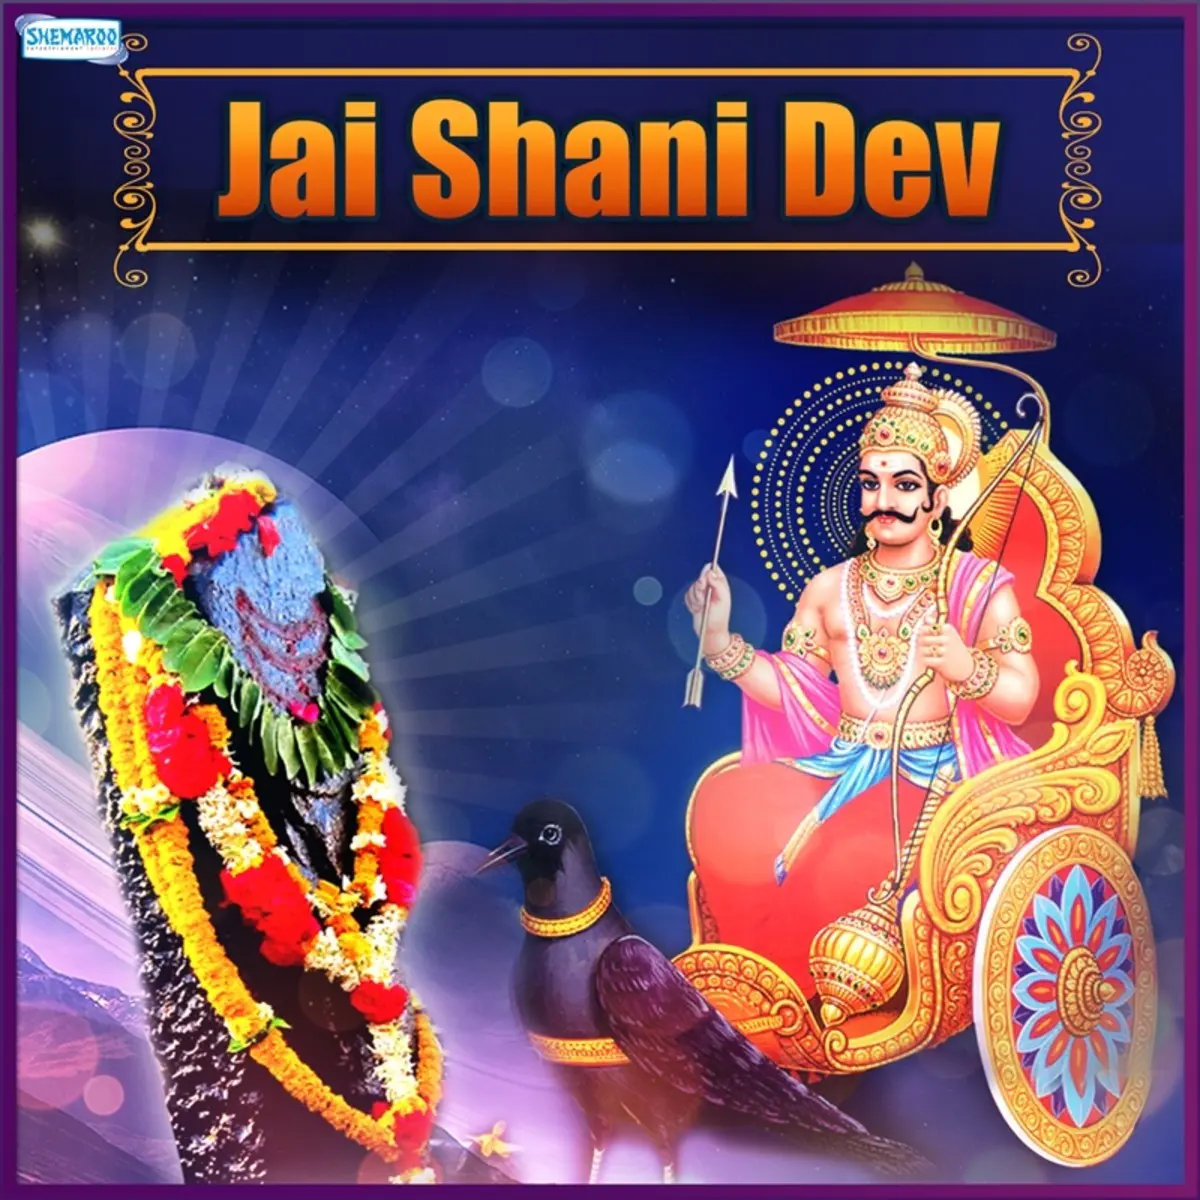 Jai Shani Dev Songs Download Jai Shani Dev Mp3 Songs Online Free On Gaana Com